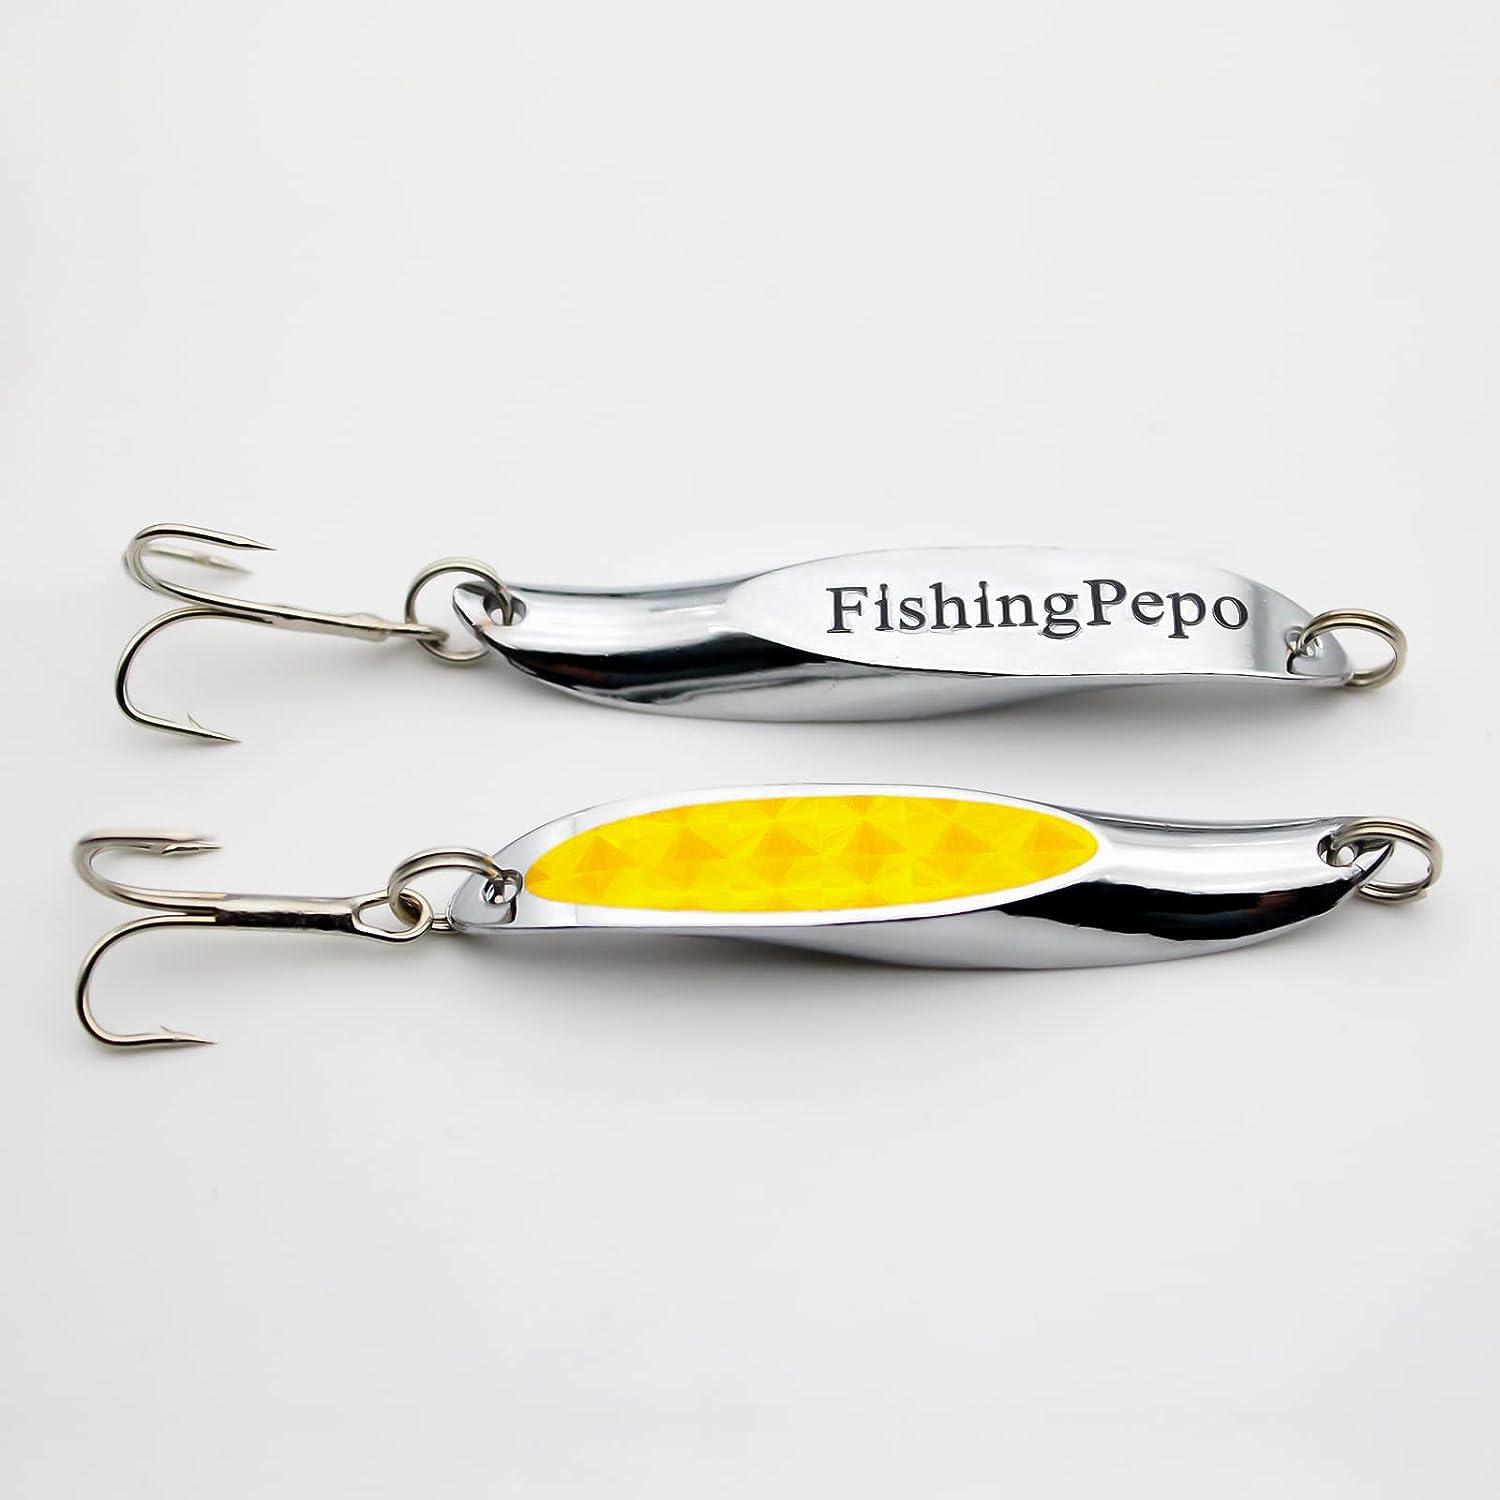 W.P.E Brand New Spinner Lure 2 pcs 3#/4#/5# Spoon lure Fishing Tackle  Treble Hook Metal Hard Lure Fishing Bait Bass Fishing Lure